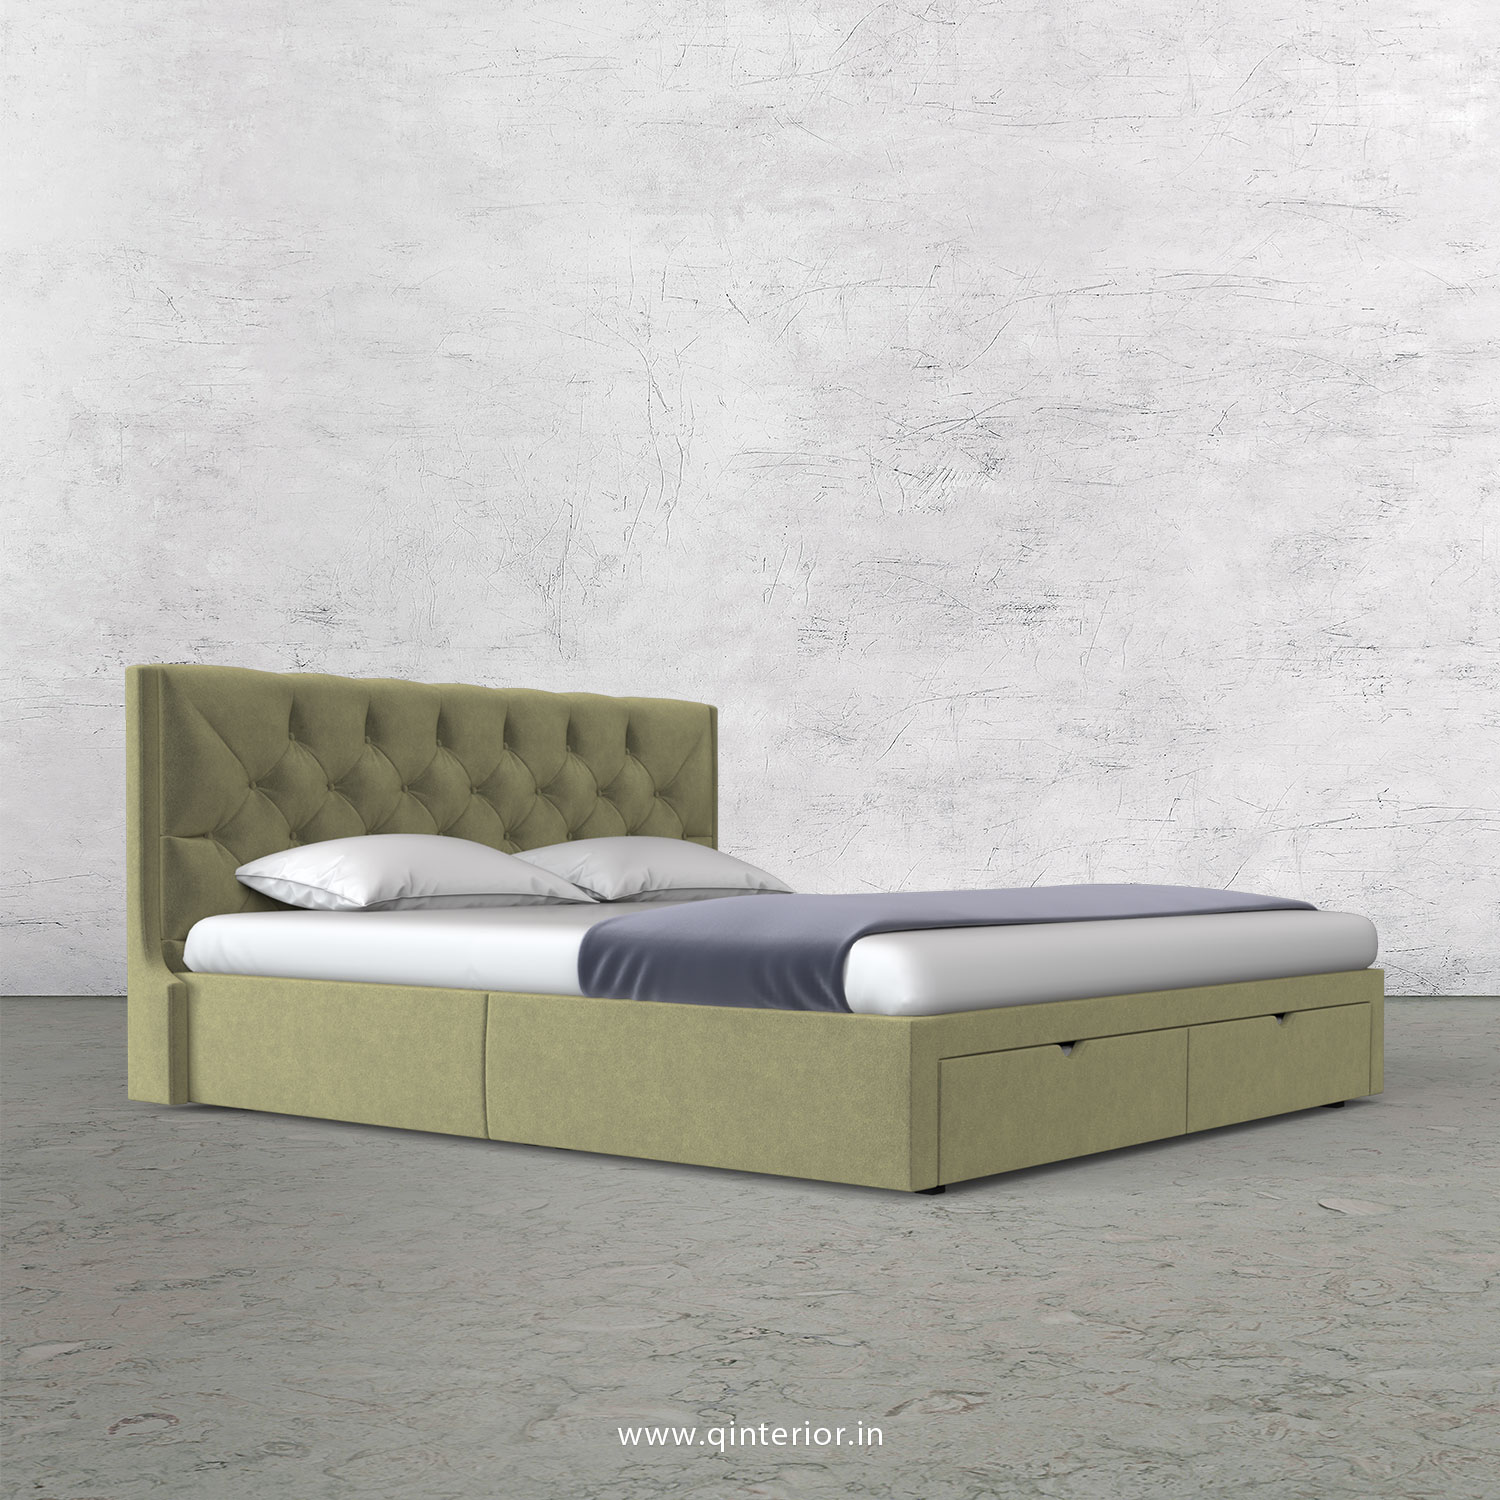 Scorpius King Size Storage Bed in Velvet Fabric - KBD001 VL04